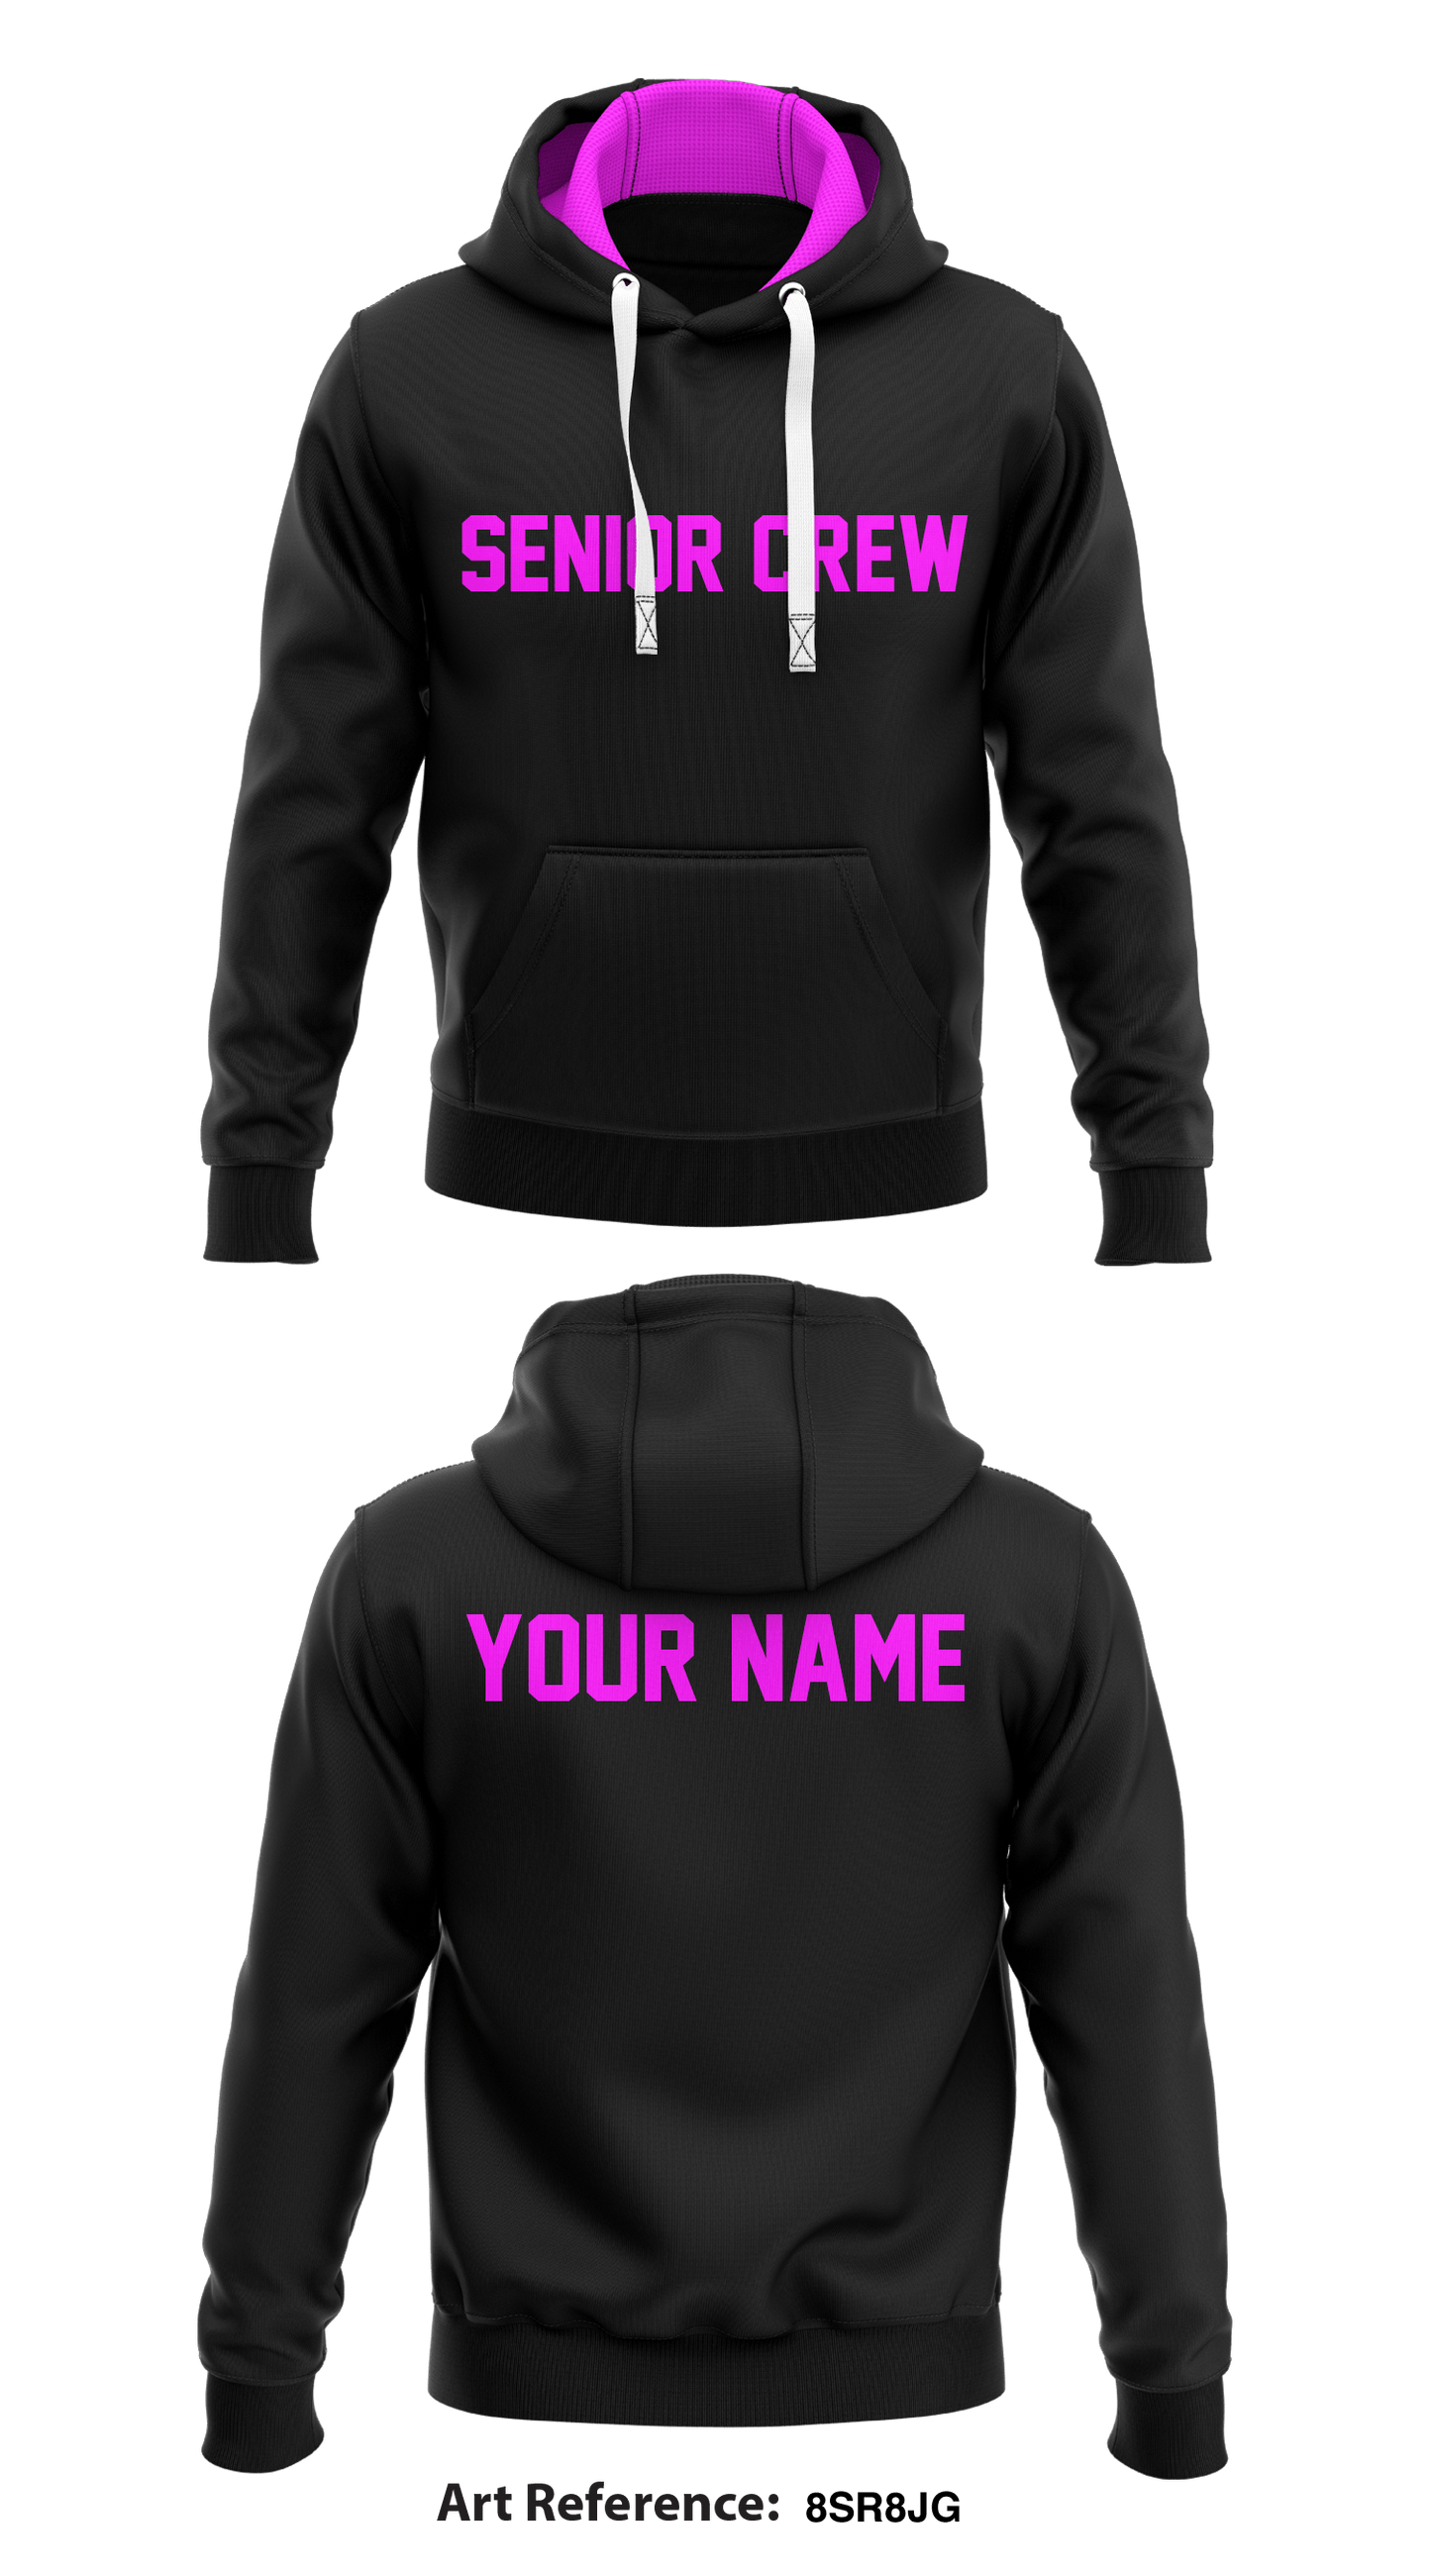 LA Dance Design Store 1  Core Men's Hooded Performance Sweatshirt - 8Sr8JG